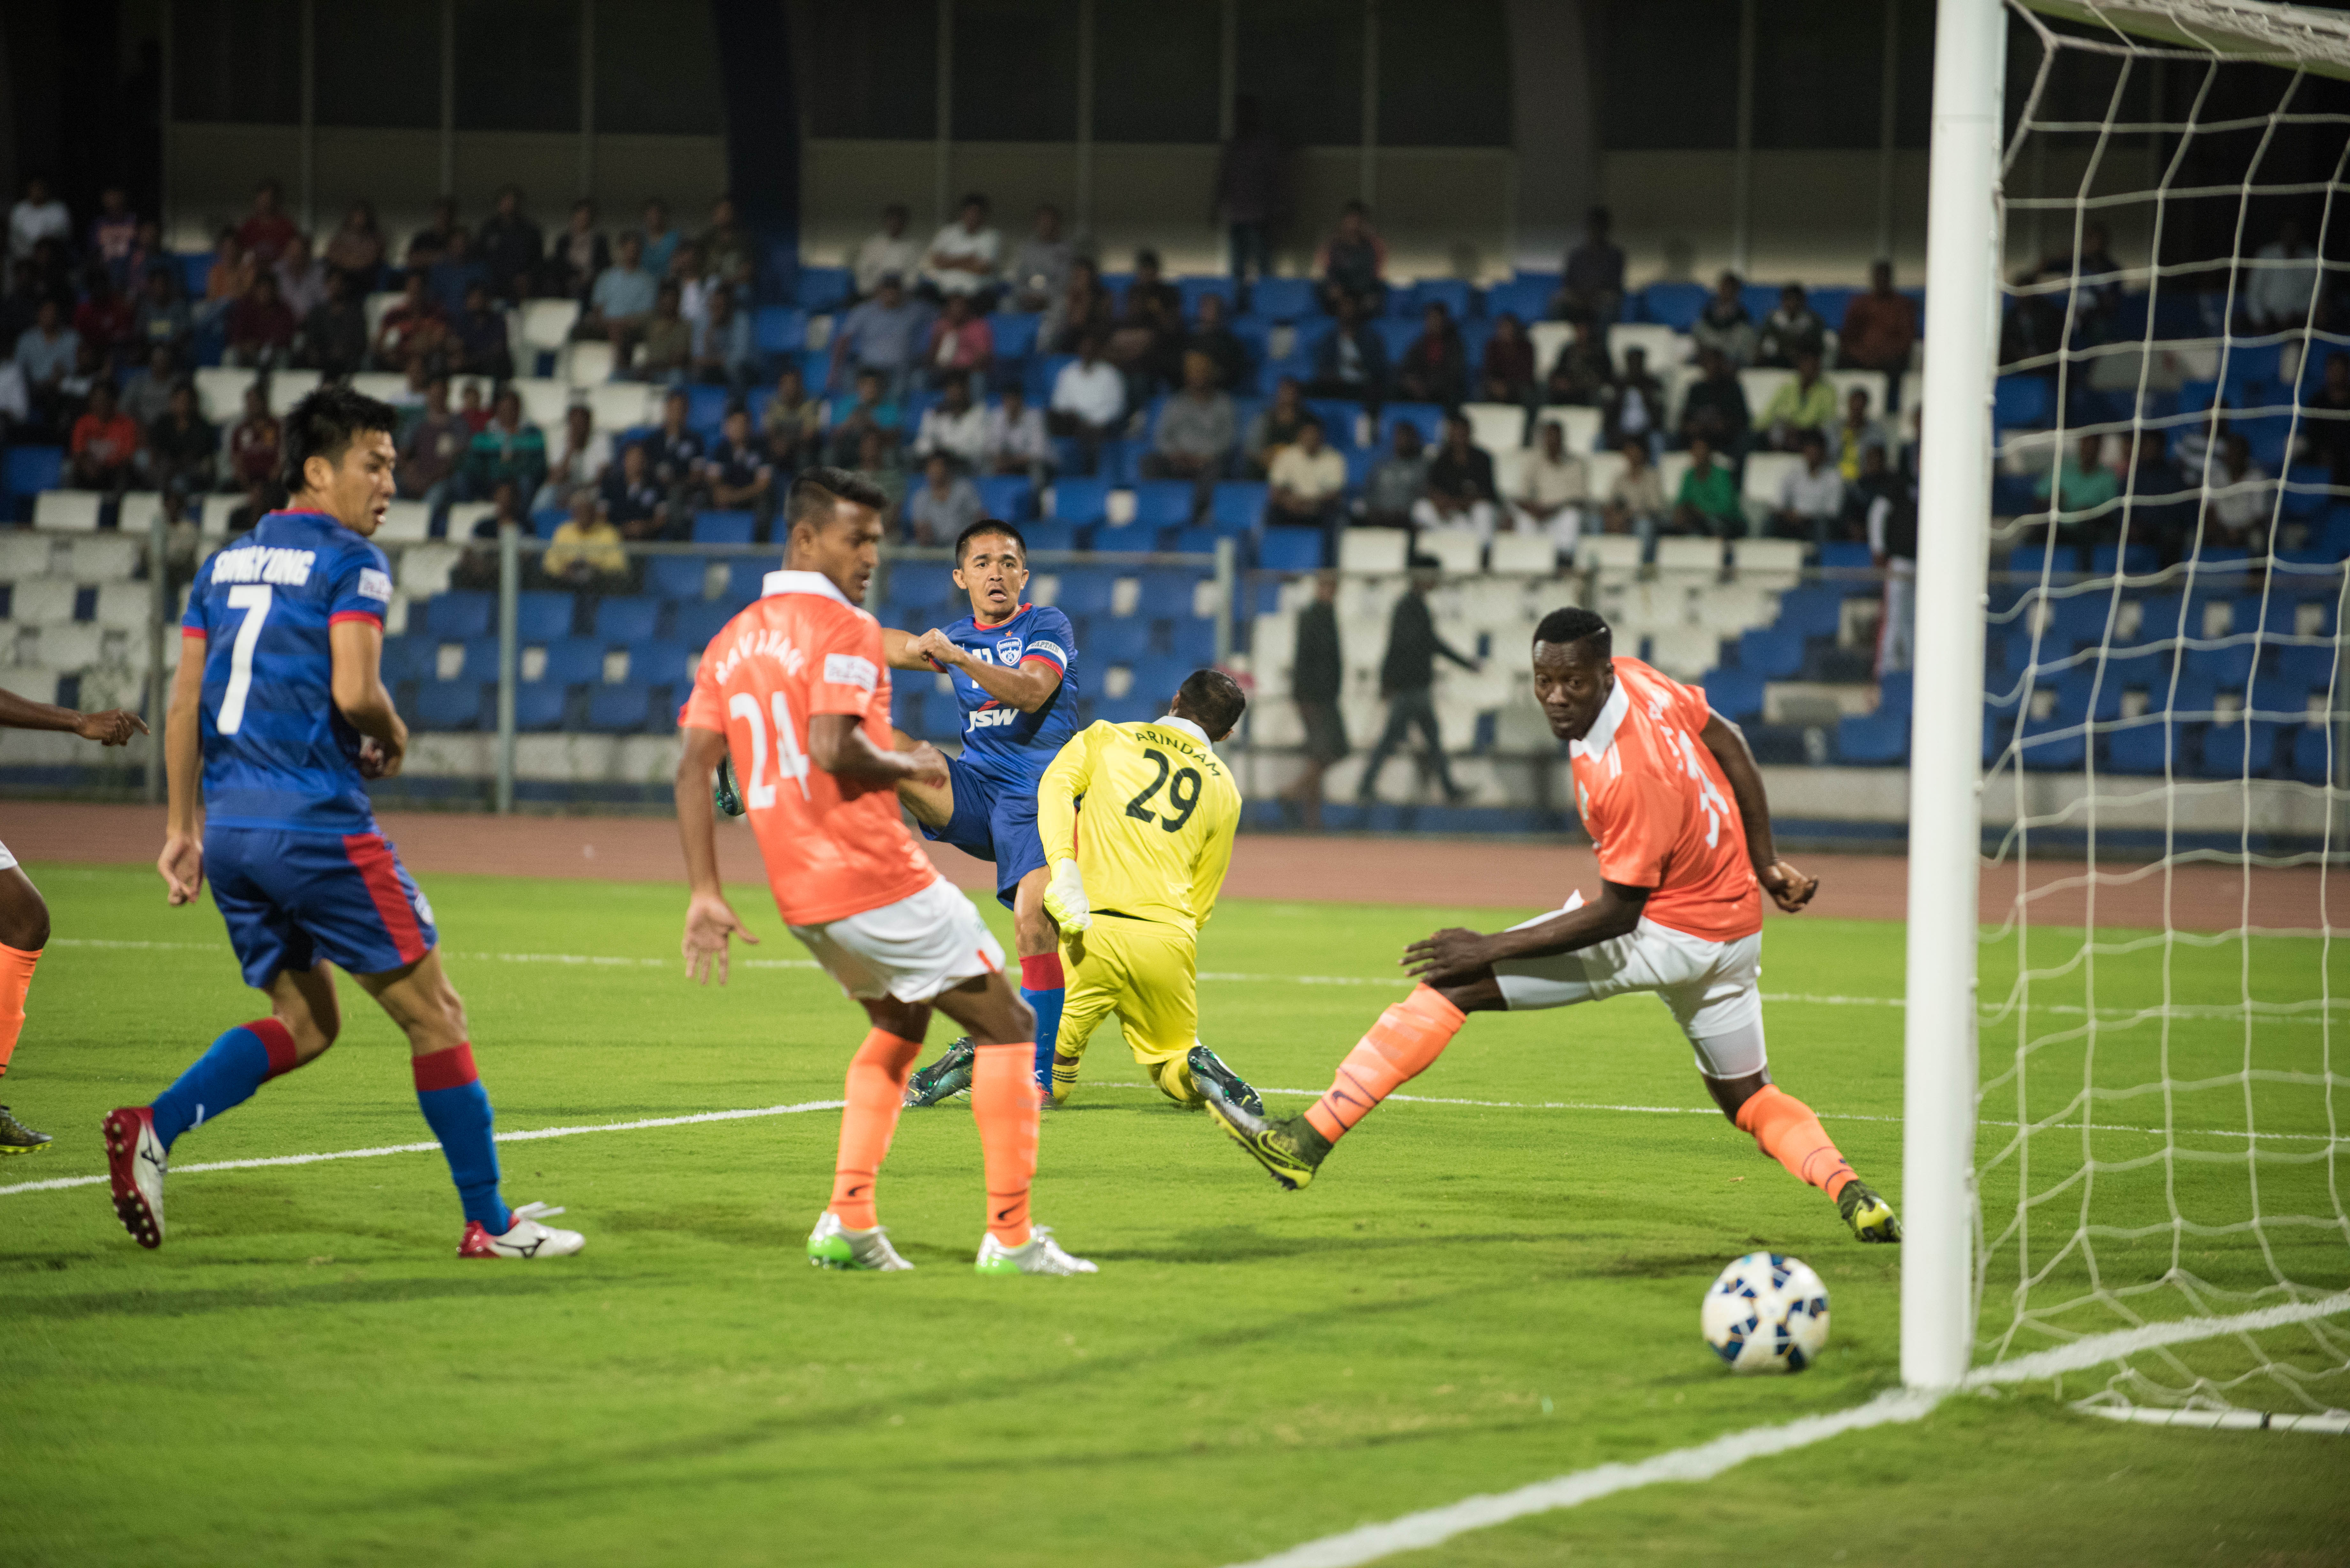 I-League 2015/16: Chhetri’s brace helps Bengaluru fightback to a draw against 10-man Sporting